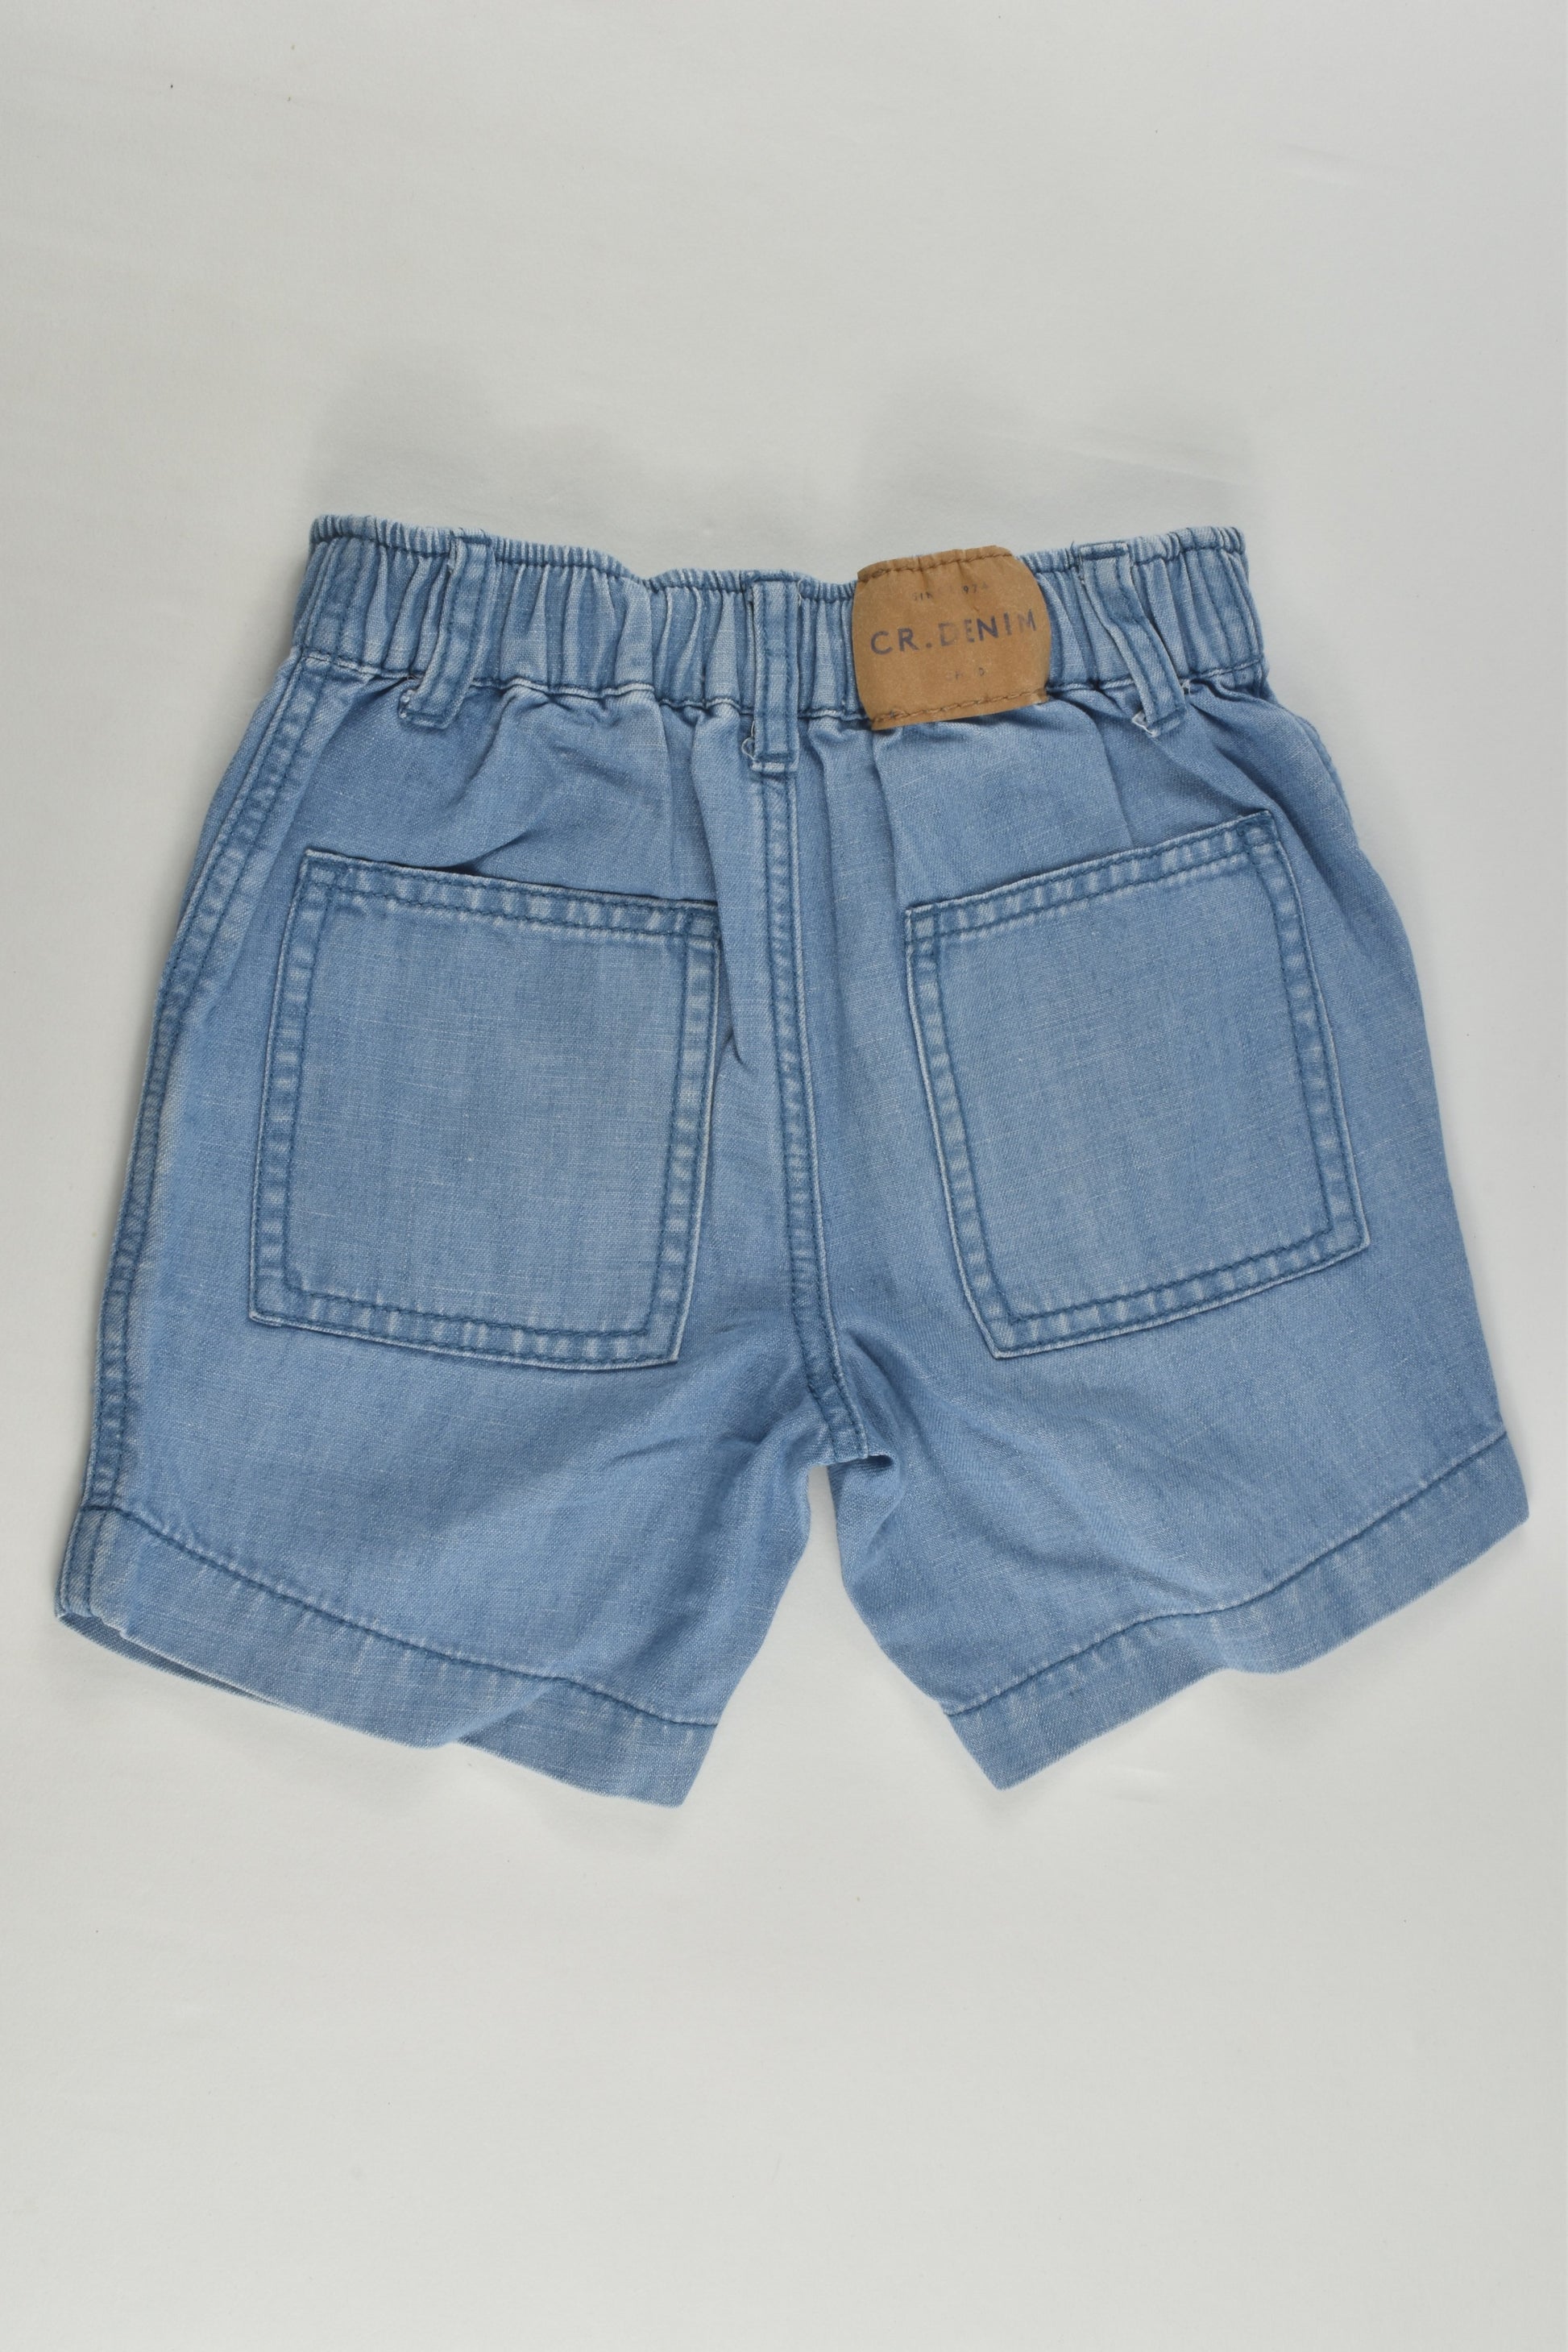 Country Road Size 3 Lightweight Cotton/Linen Denim Shorts